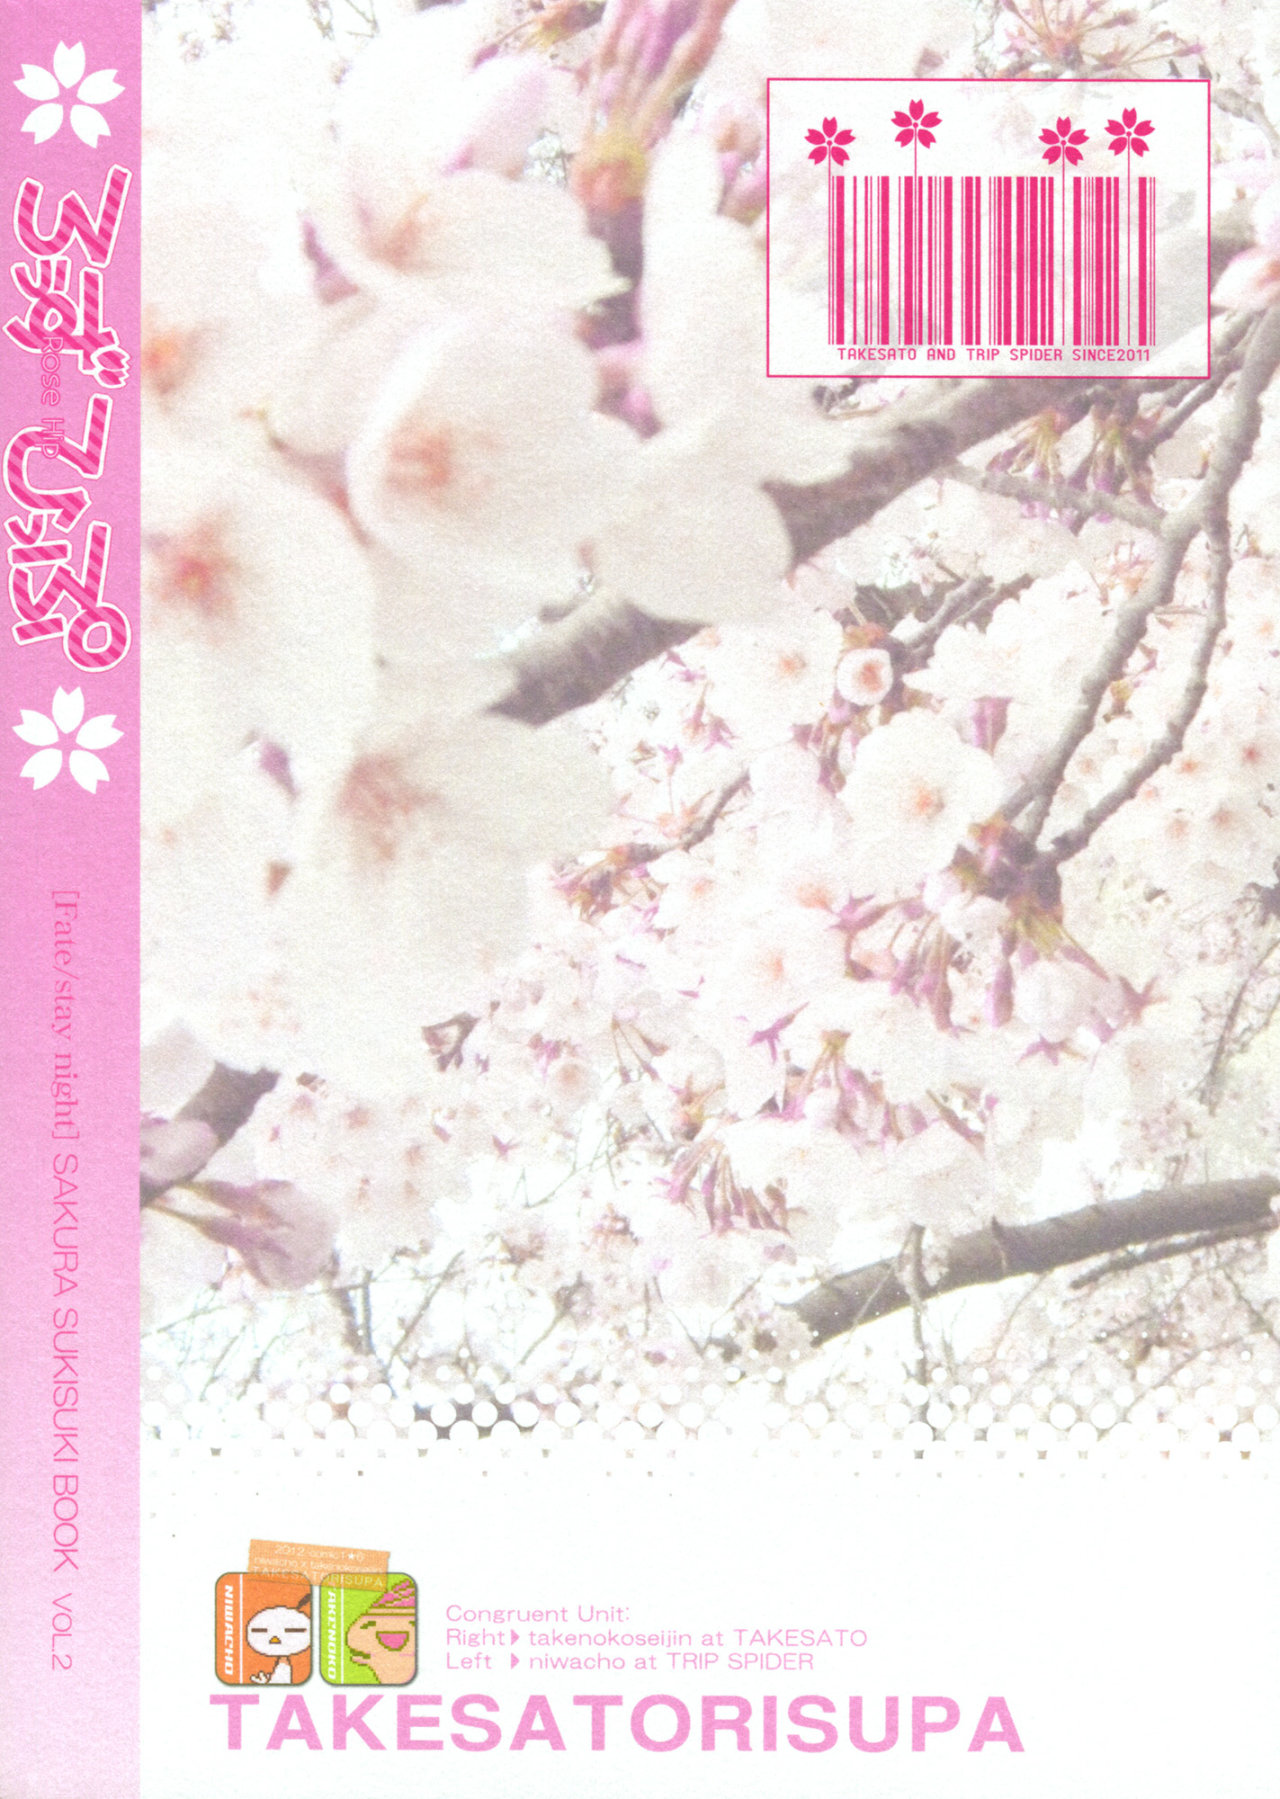 [Takesatorispa (niwacho - Takenoko Seijin)] rose hip (Fate stay night) - 26